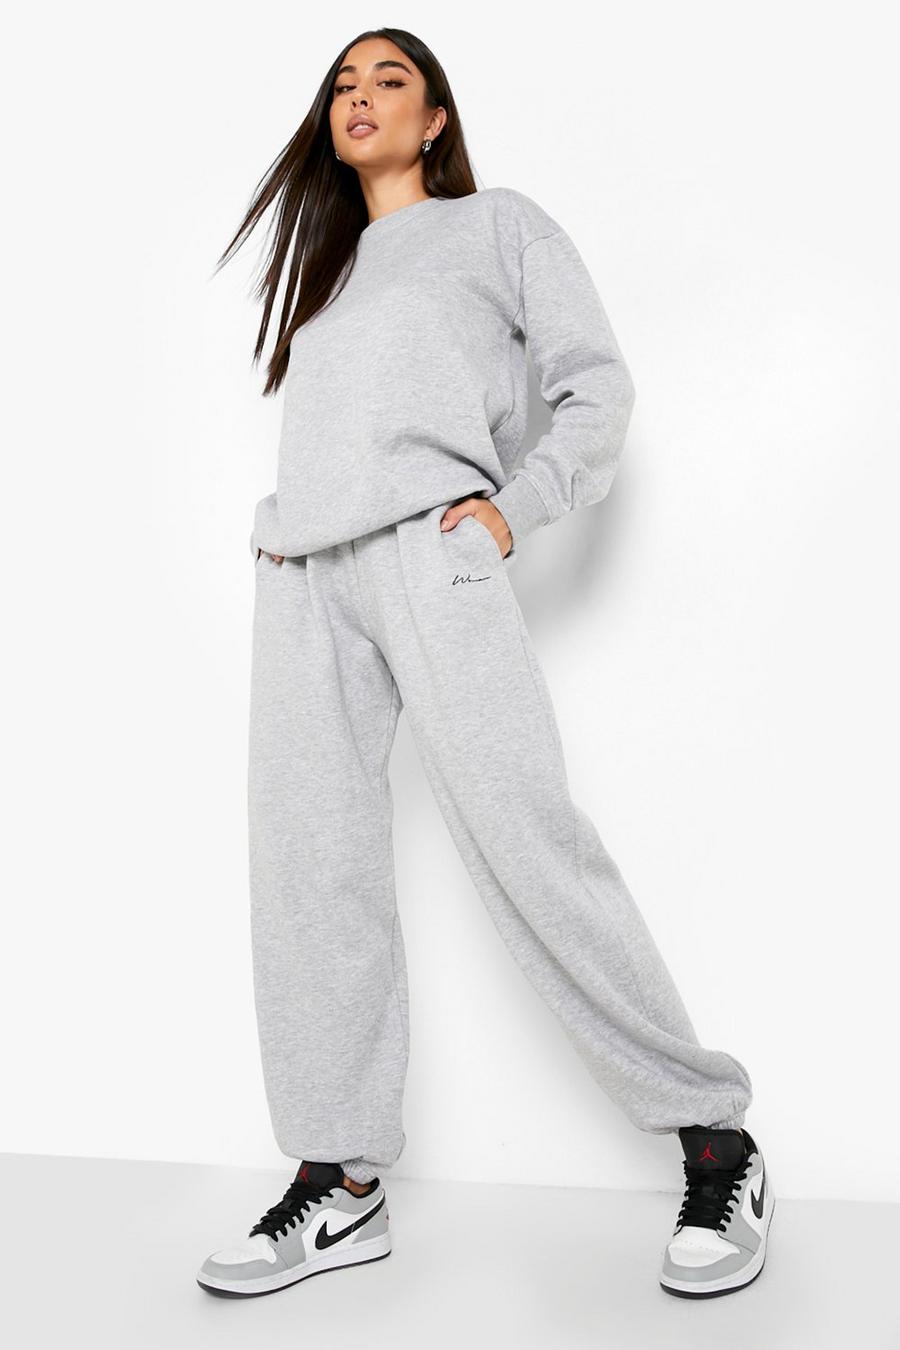 Pantalón deportivo Woman oversize reciclado, Grey marl gris